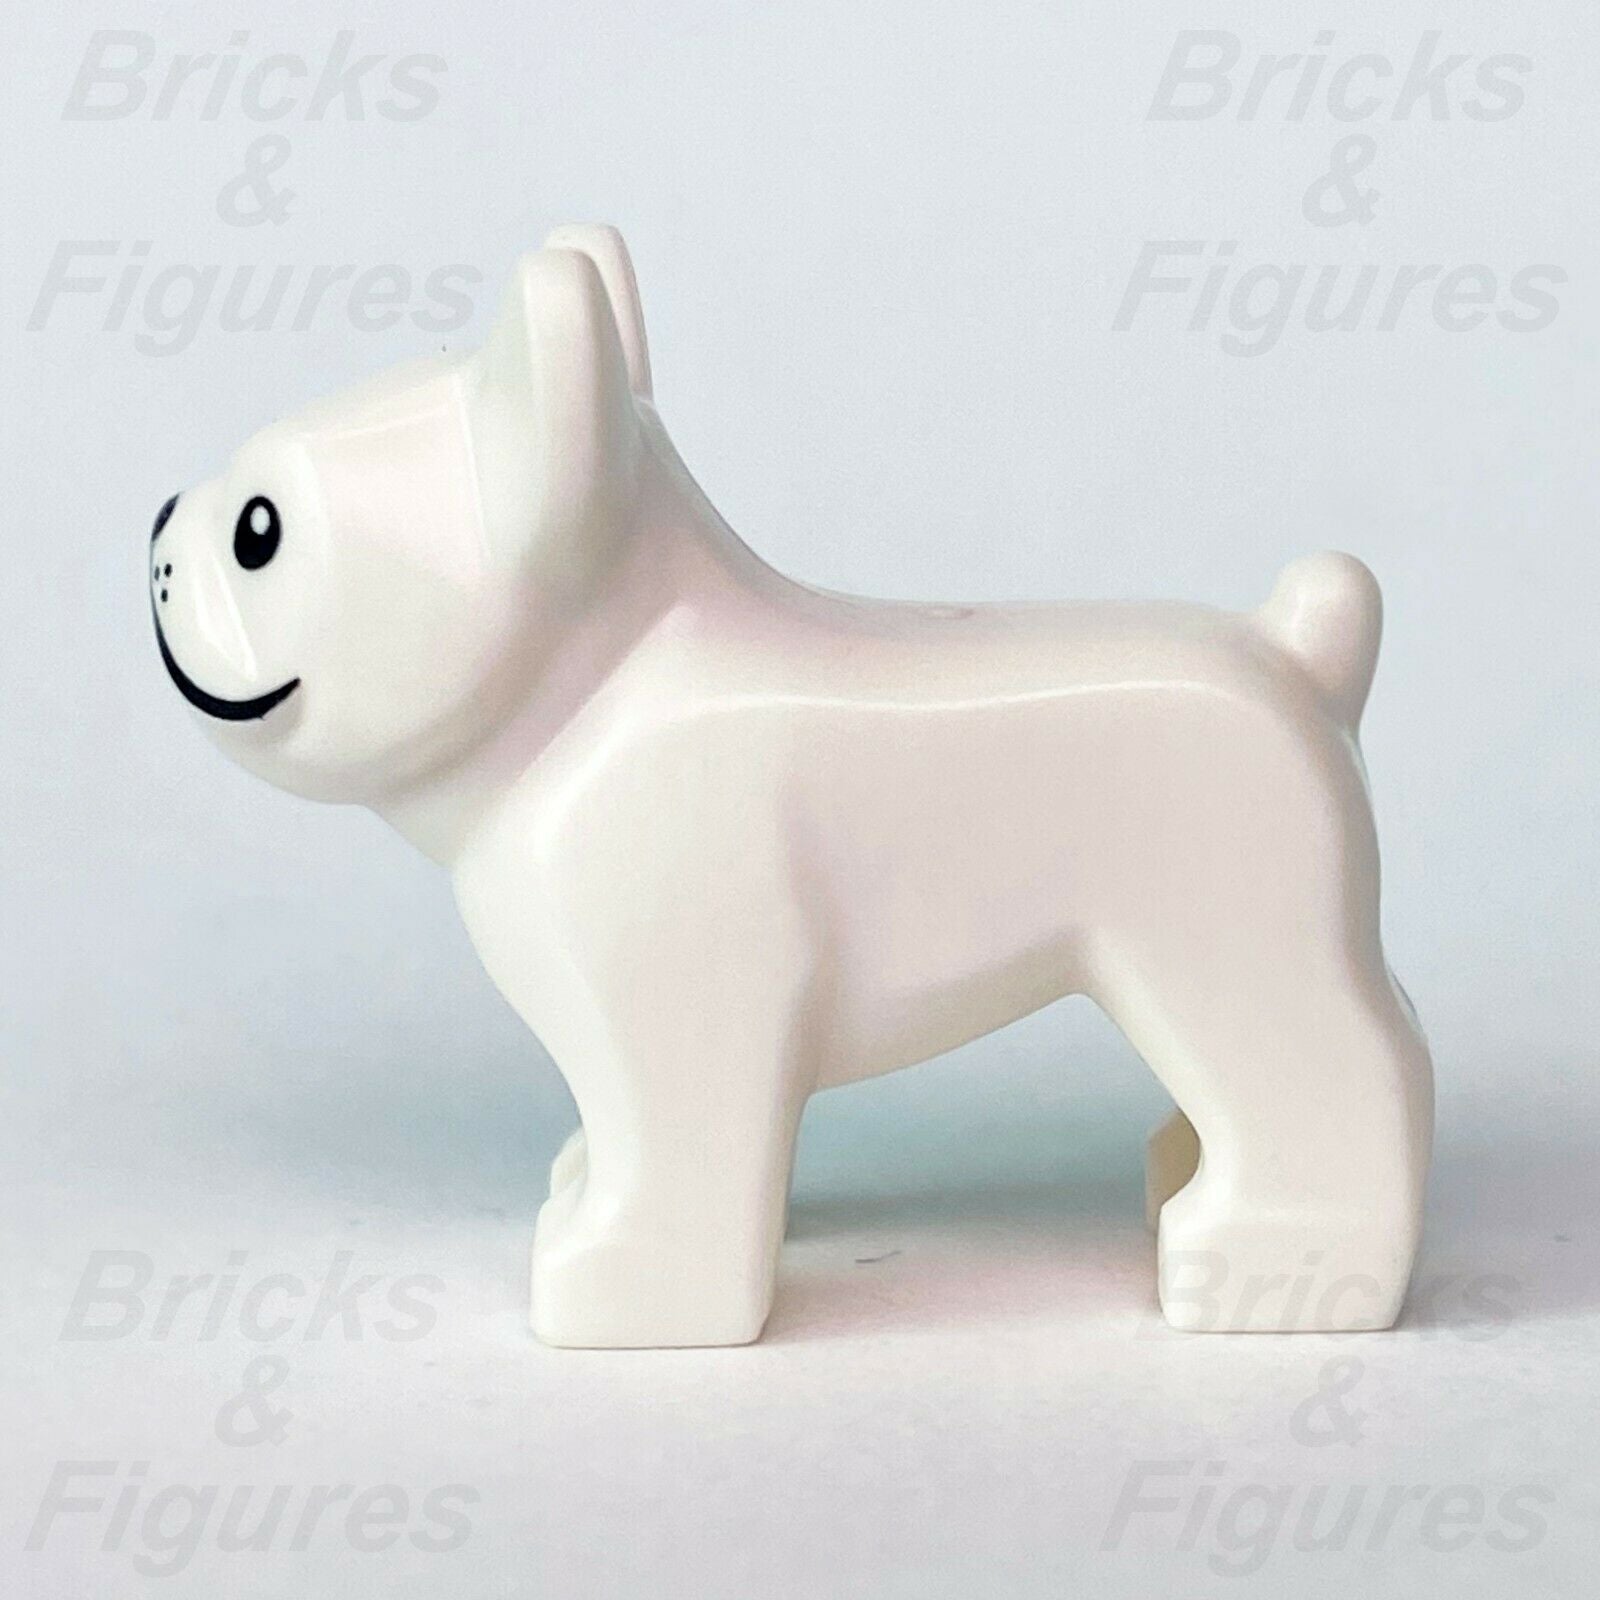 Collectible Minifigures LEGO French Bulldog Eye Patch Dog Animal Part 71025 - Bricks & Figures